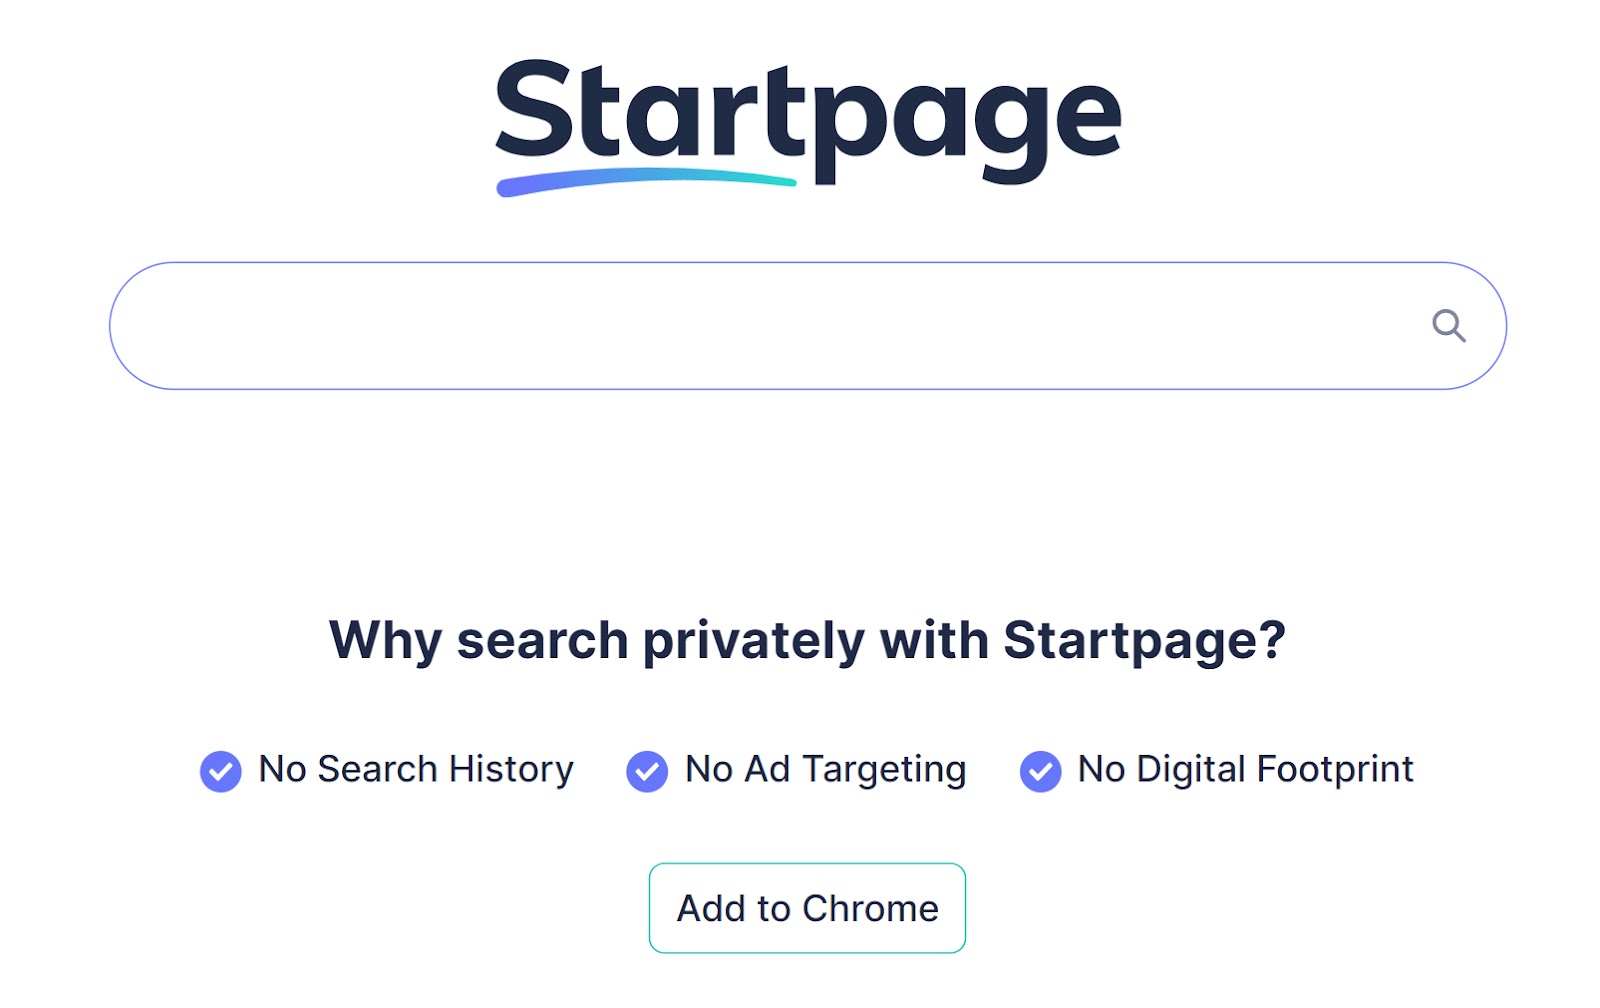 Startpage search engine